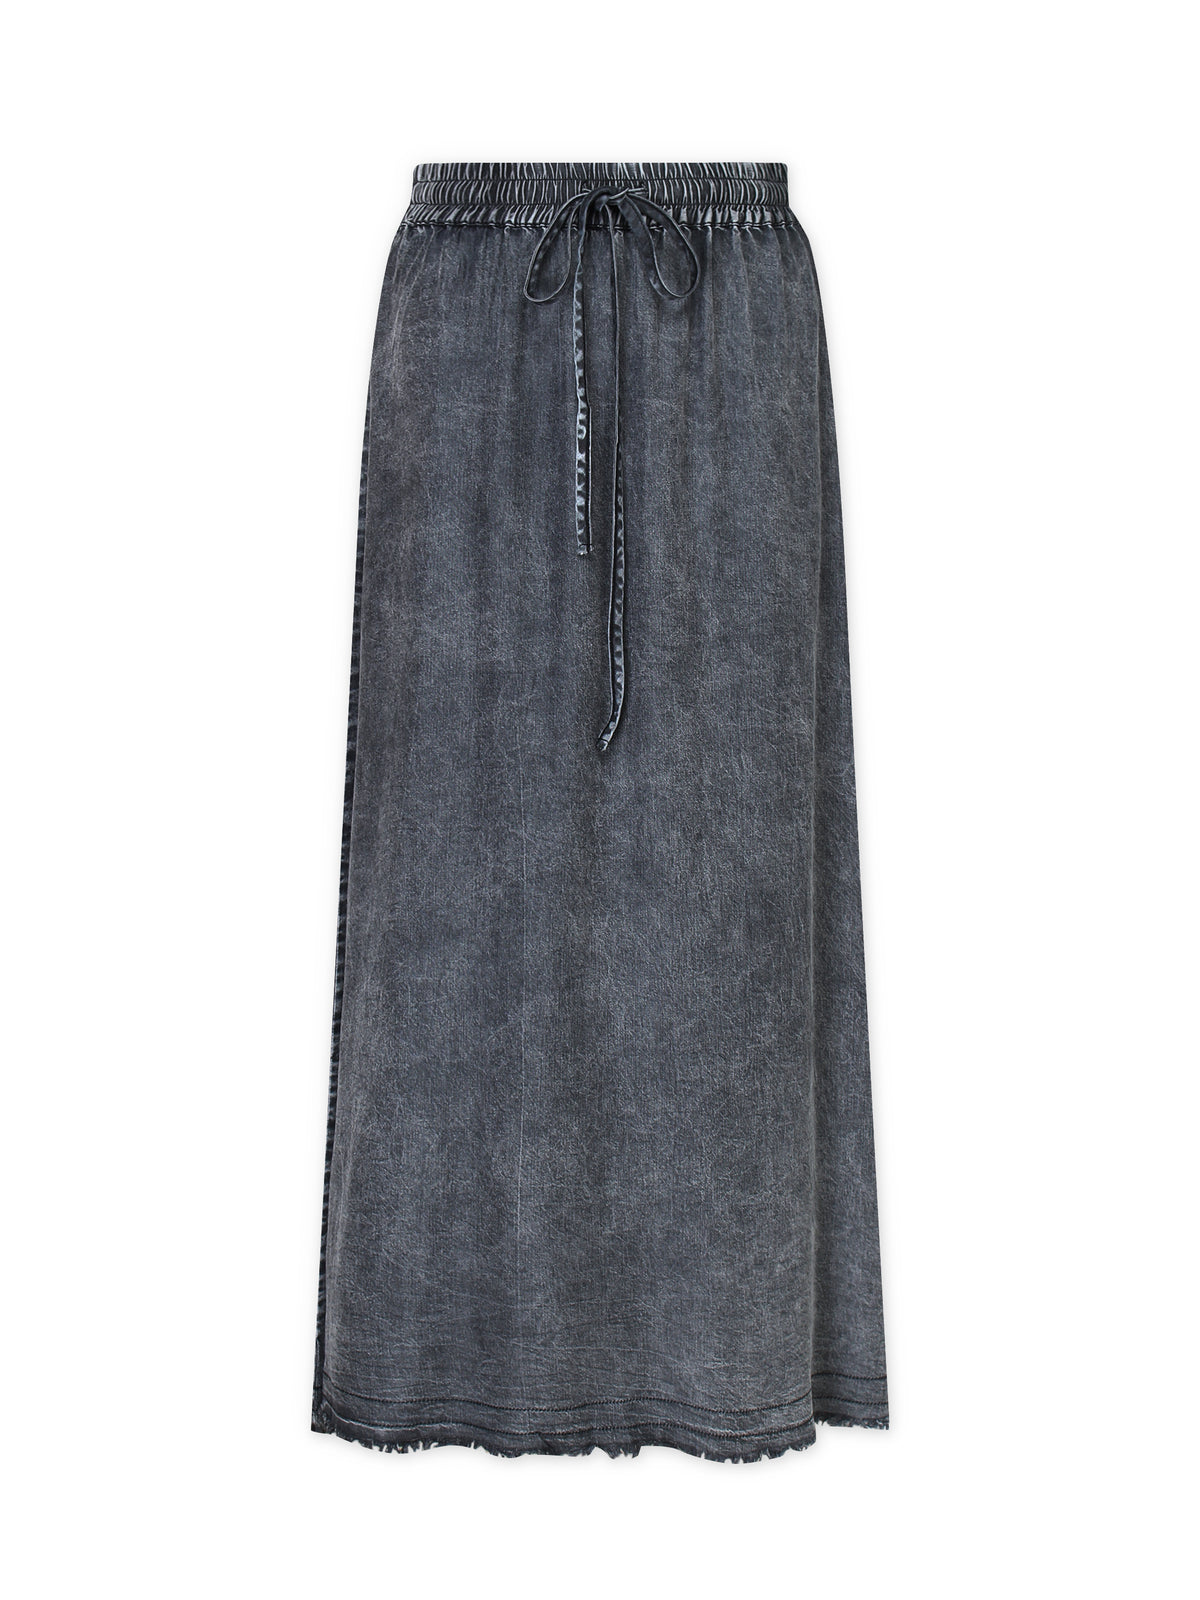 Washed Drawstring Denim Skirt-Black